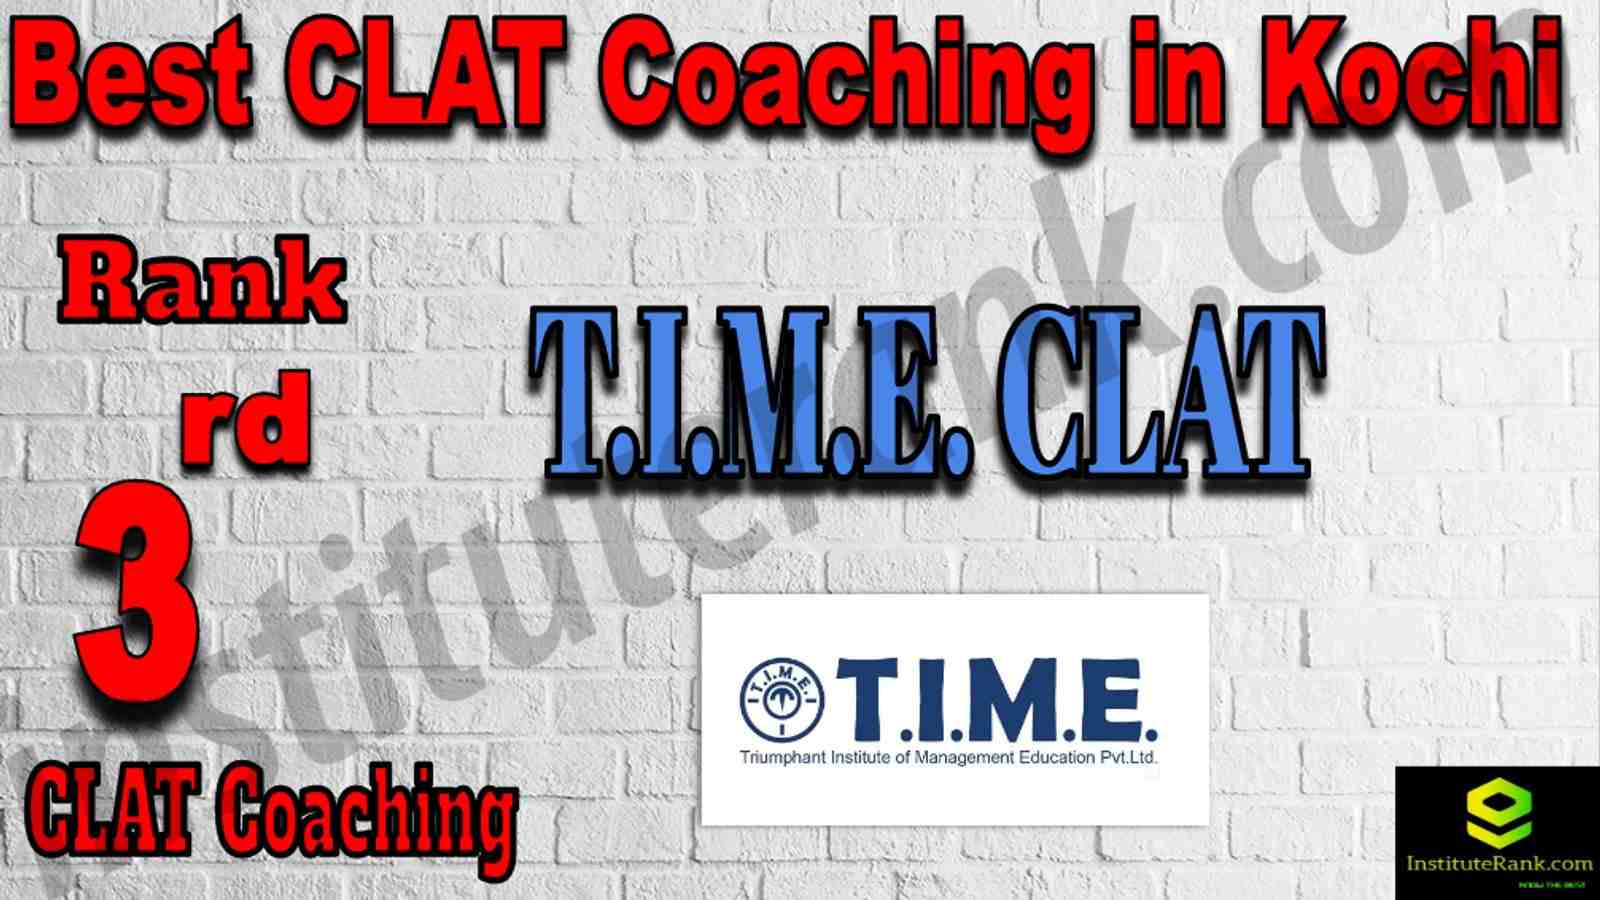 3rd Best CLAT Coaching in Kochi